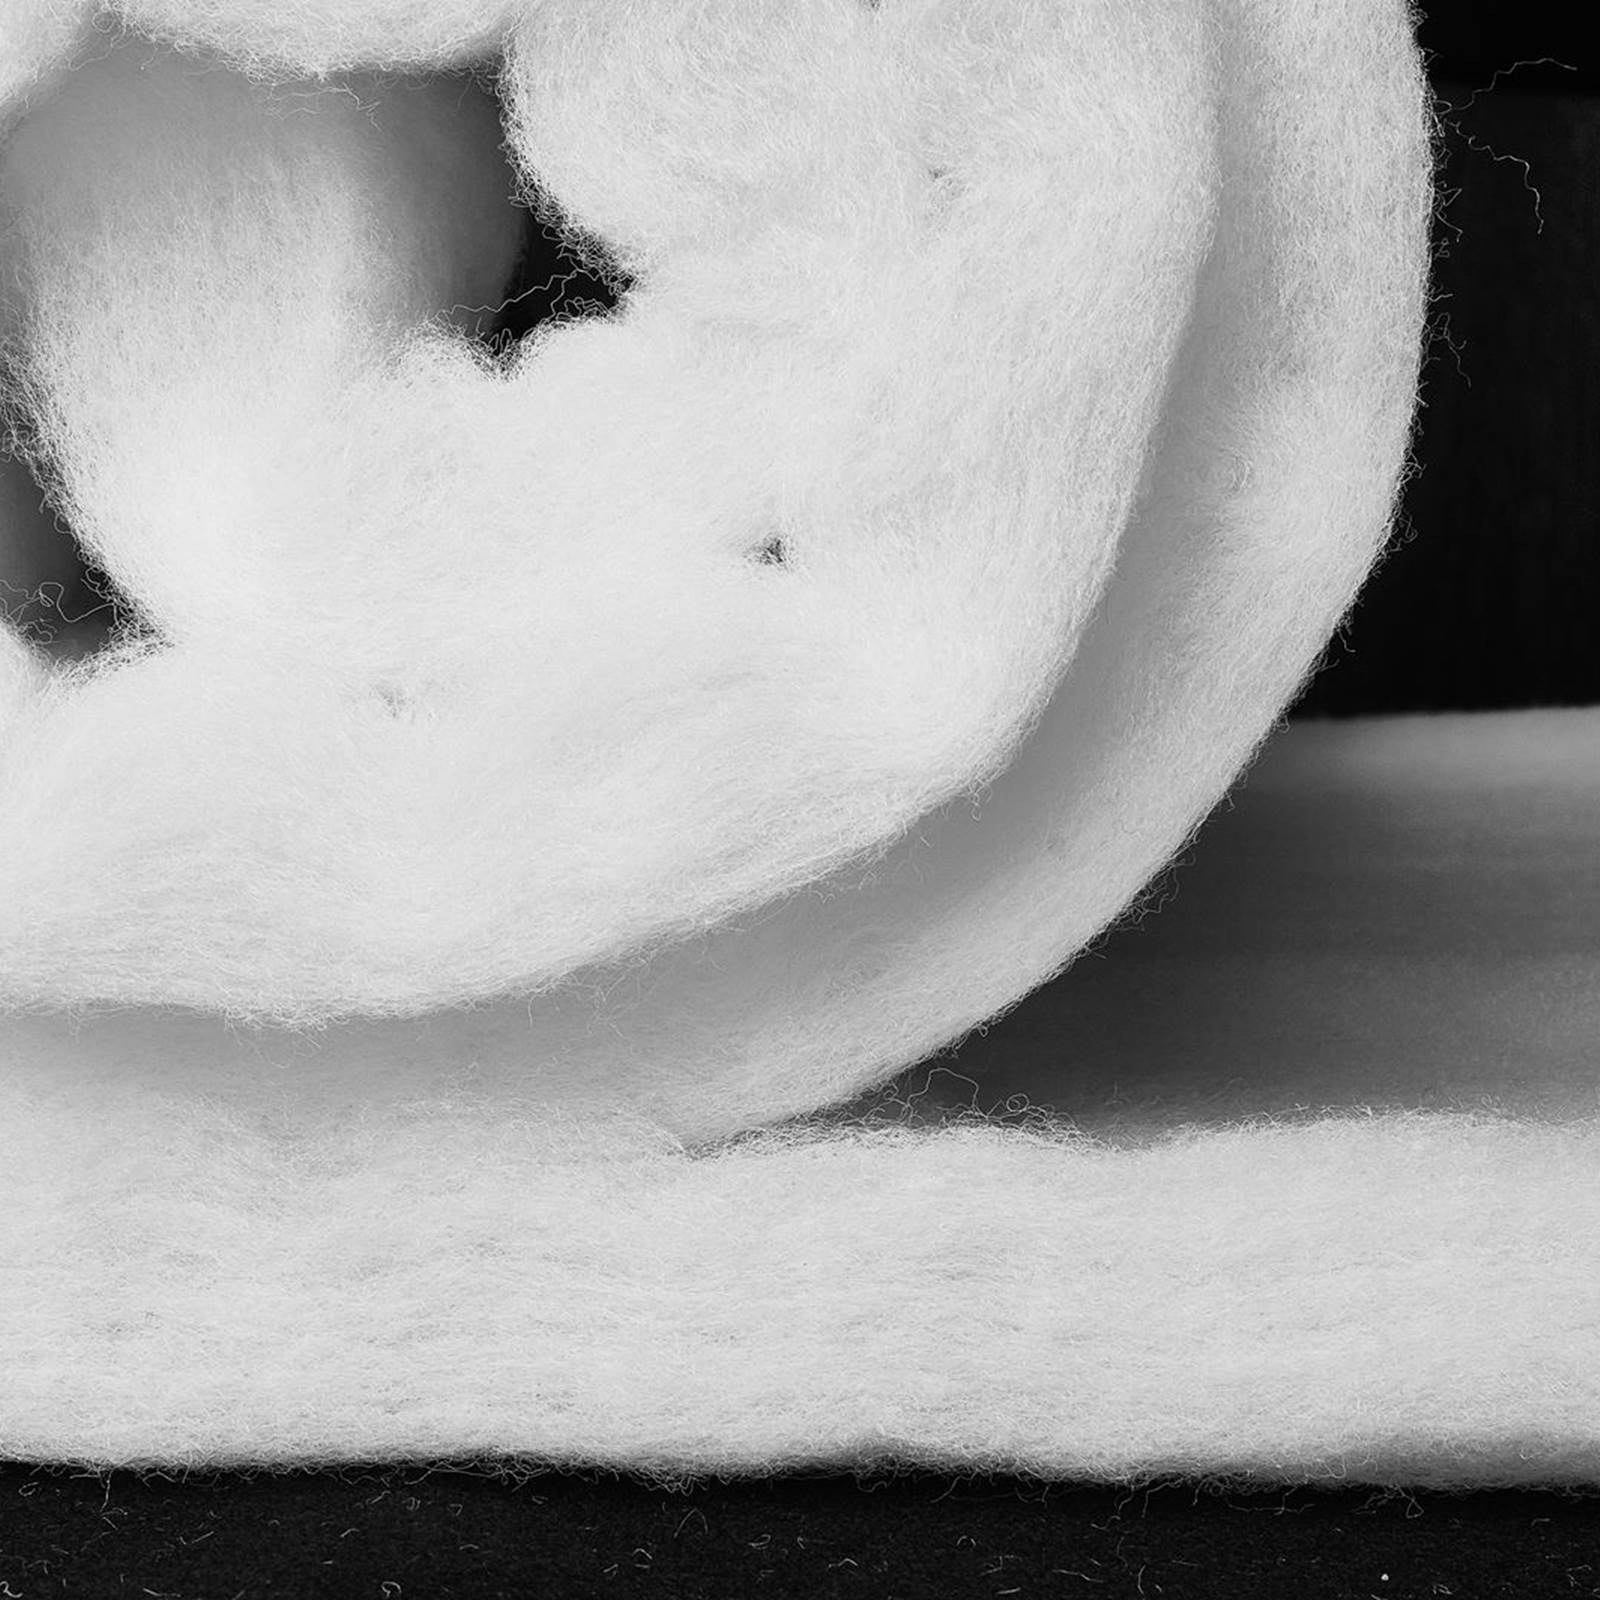 Snow mat - 330g 210cm wide - snow fleece - Flame retardant BS 5852, B1